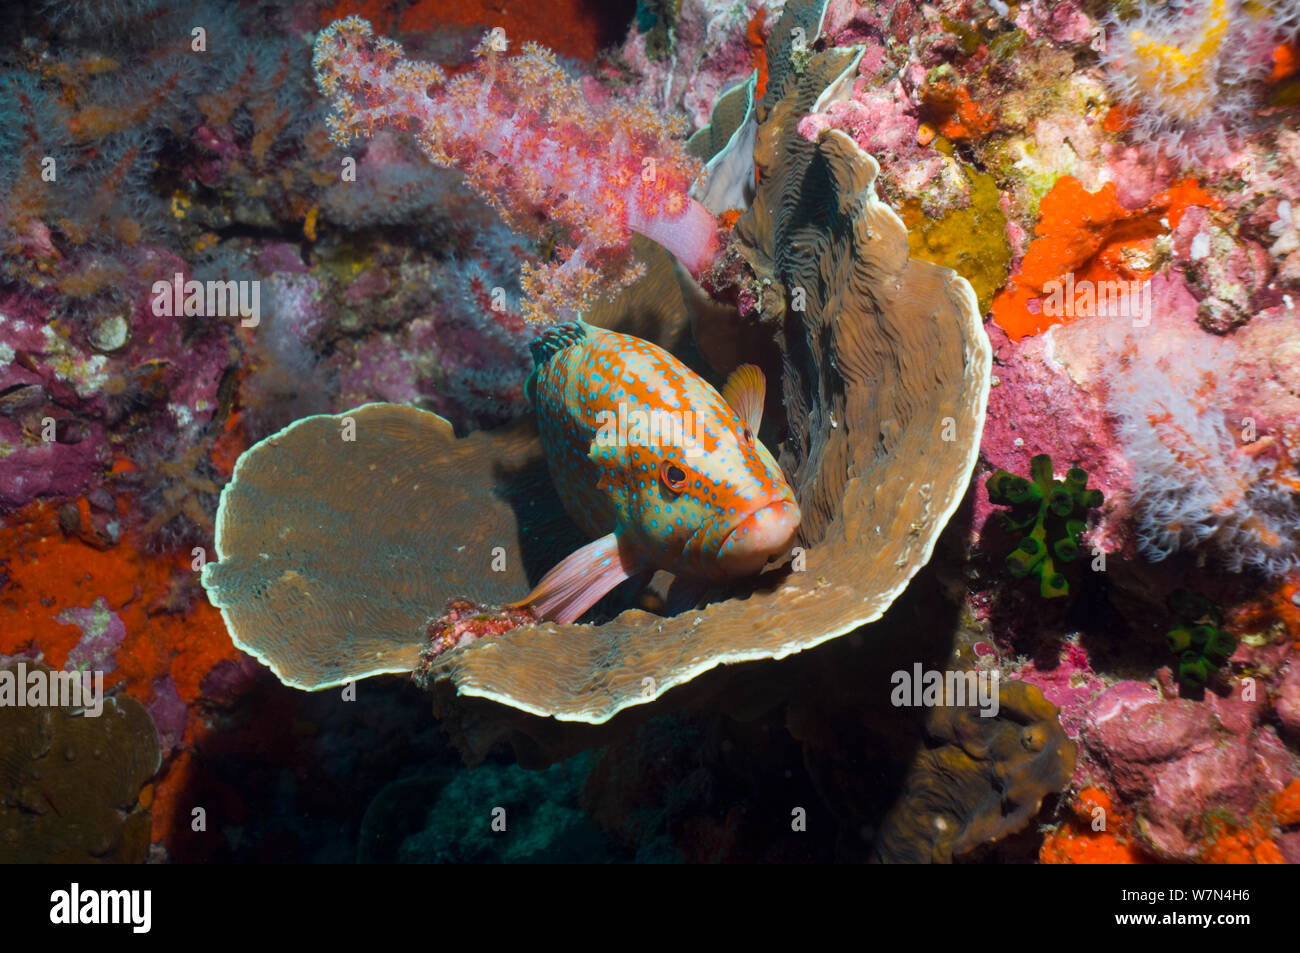 Coral hind (Cephalopholis miniata) lying in coral basin (Agaricia undata) Andaman Sea, Thailand Stock Photo